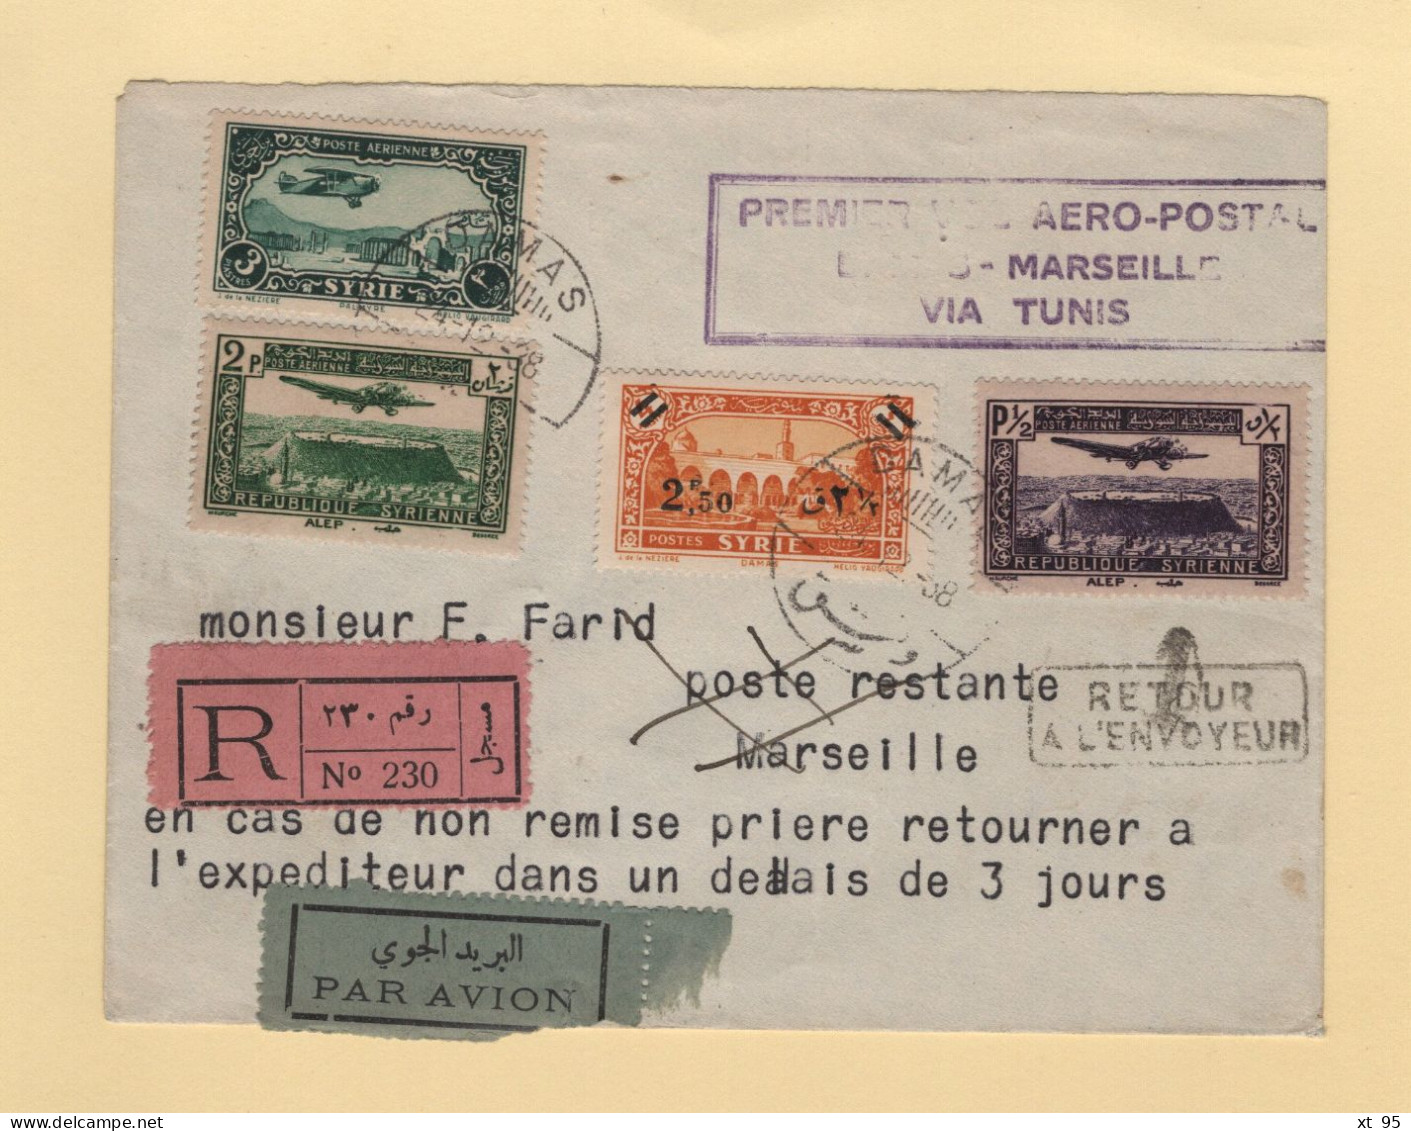 Syrie - Premier Vol Aero Postal Damas Marseille Via Tunis - 24-12-1938 - Recommande Par Avion - Briefe U. Dokumente